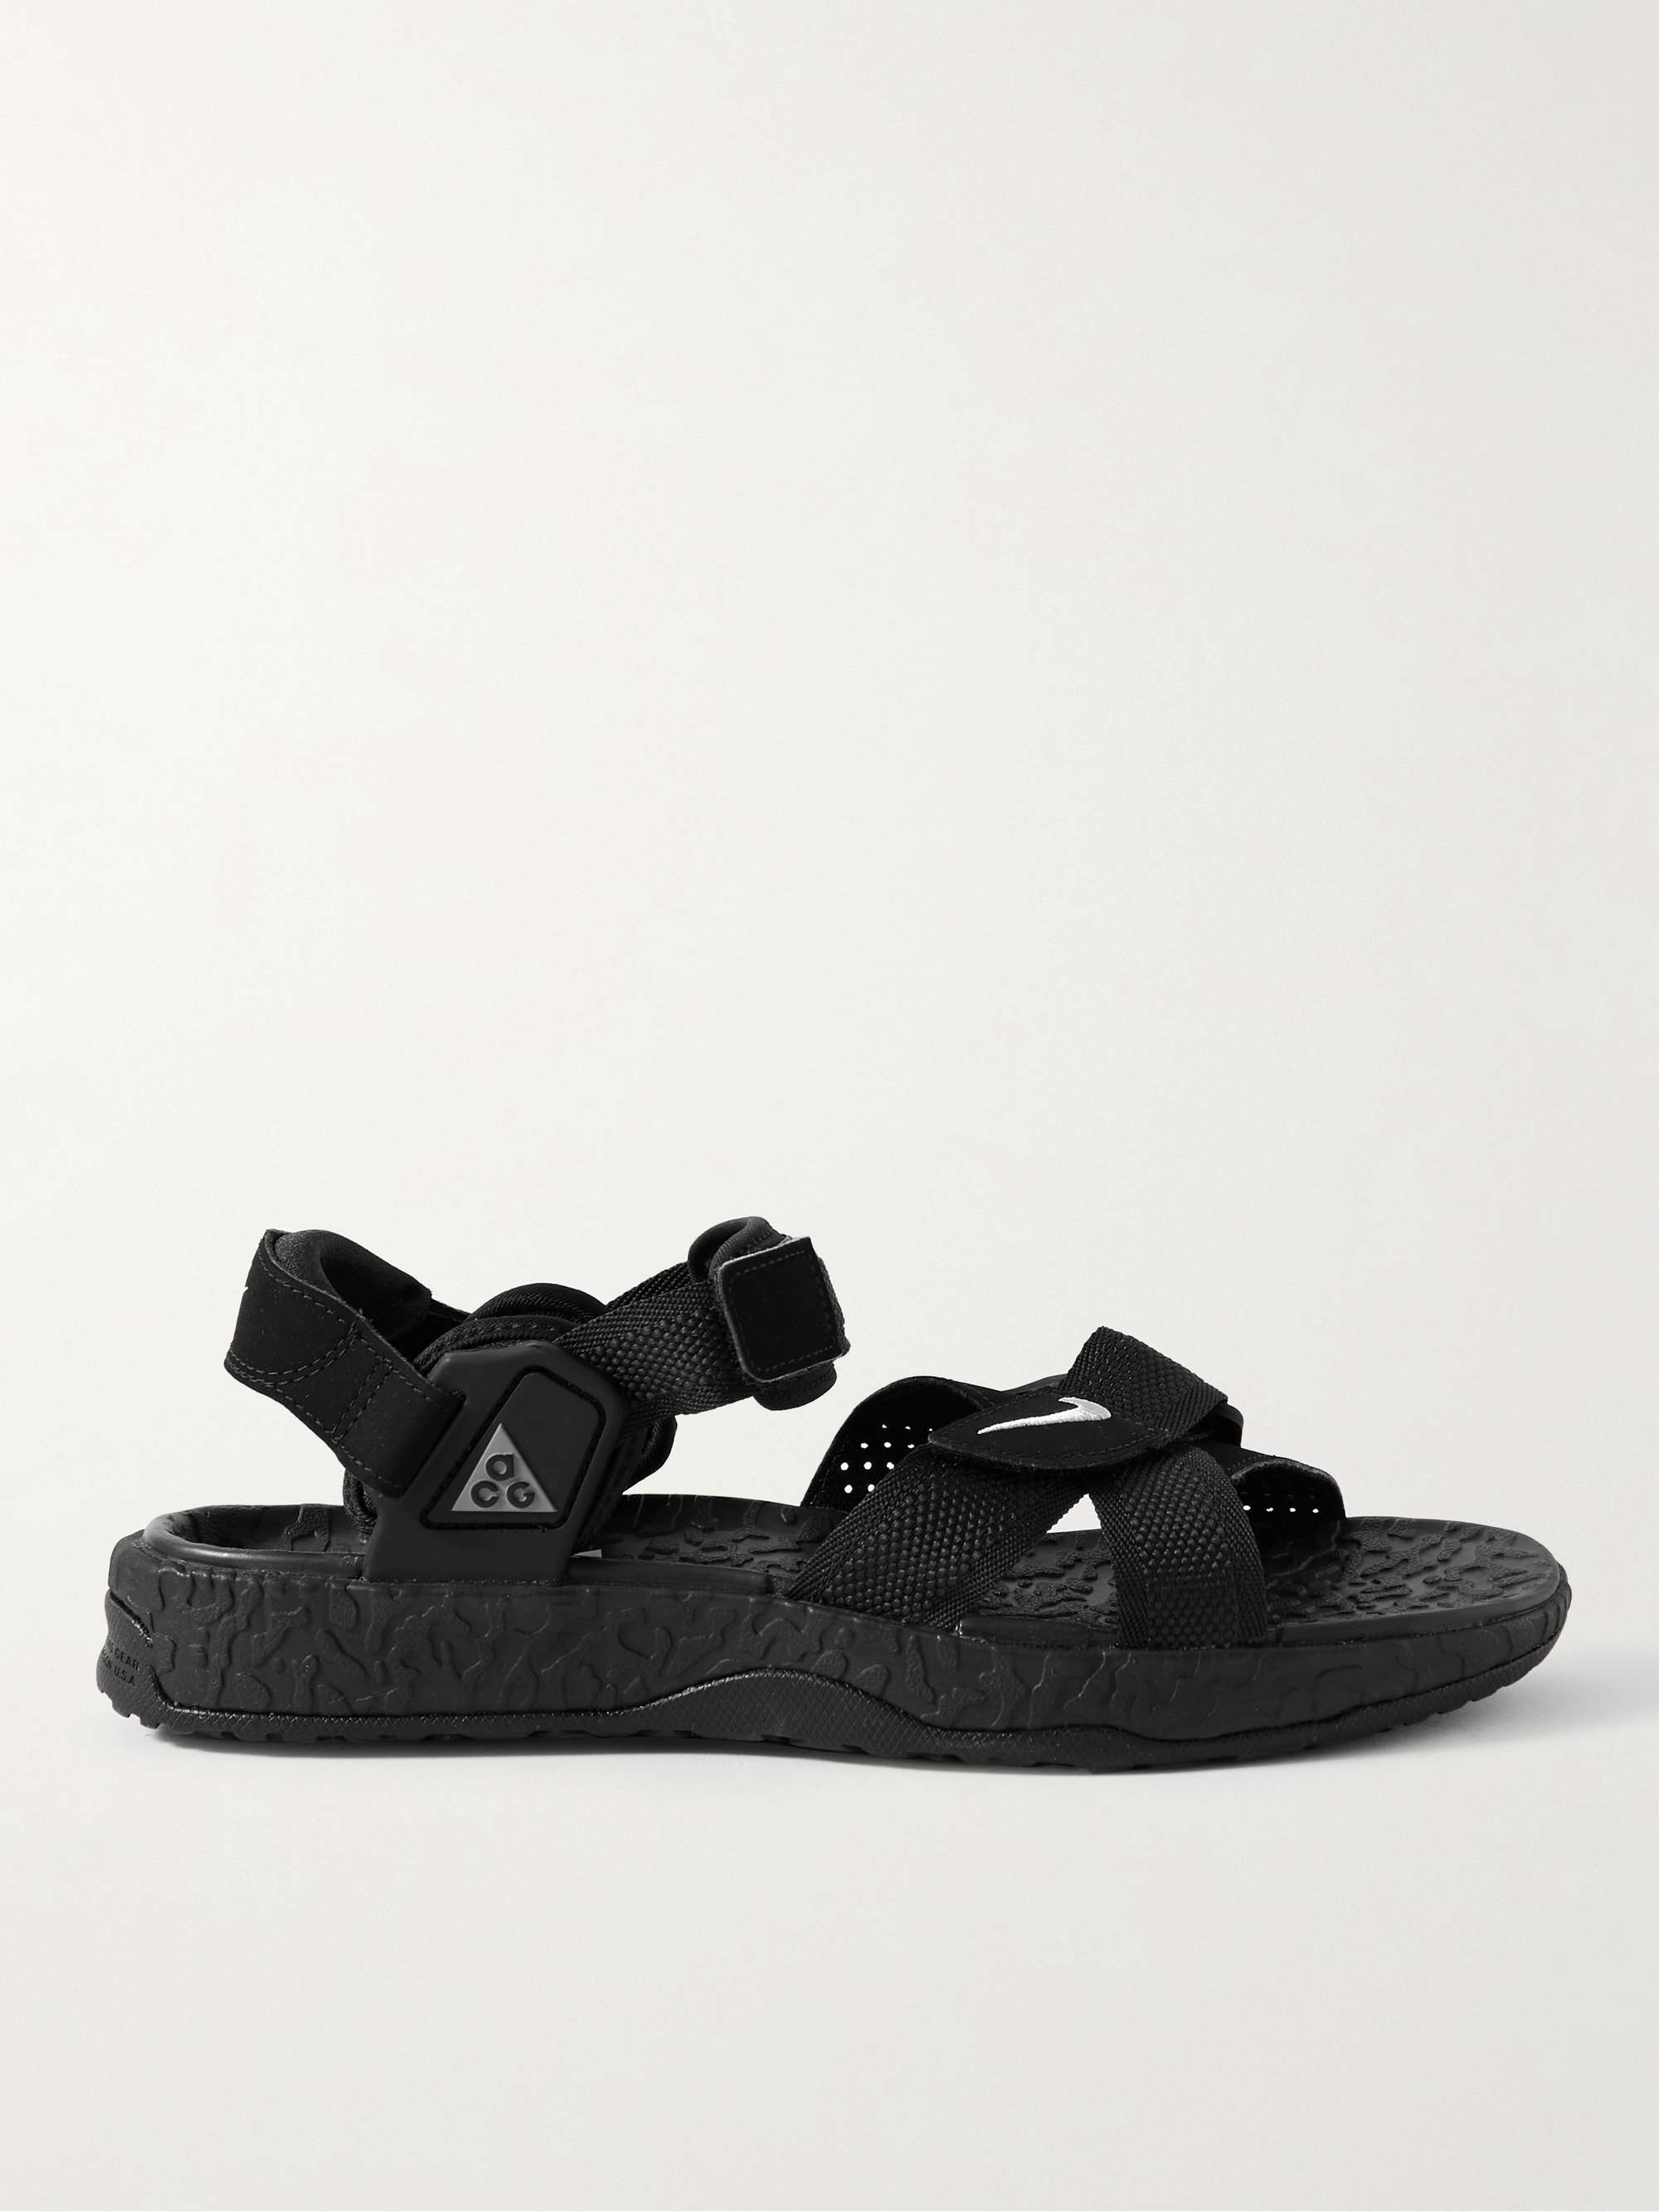 Black ACG Air Deschutz+ Suede and Webbing-Trimmed Rubber Sandals | NIKE |  MR PORTER